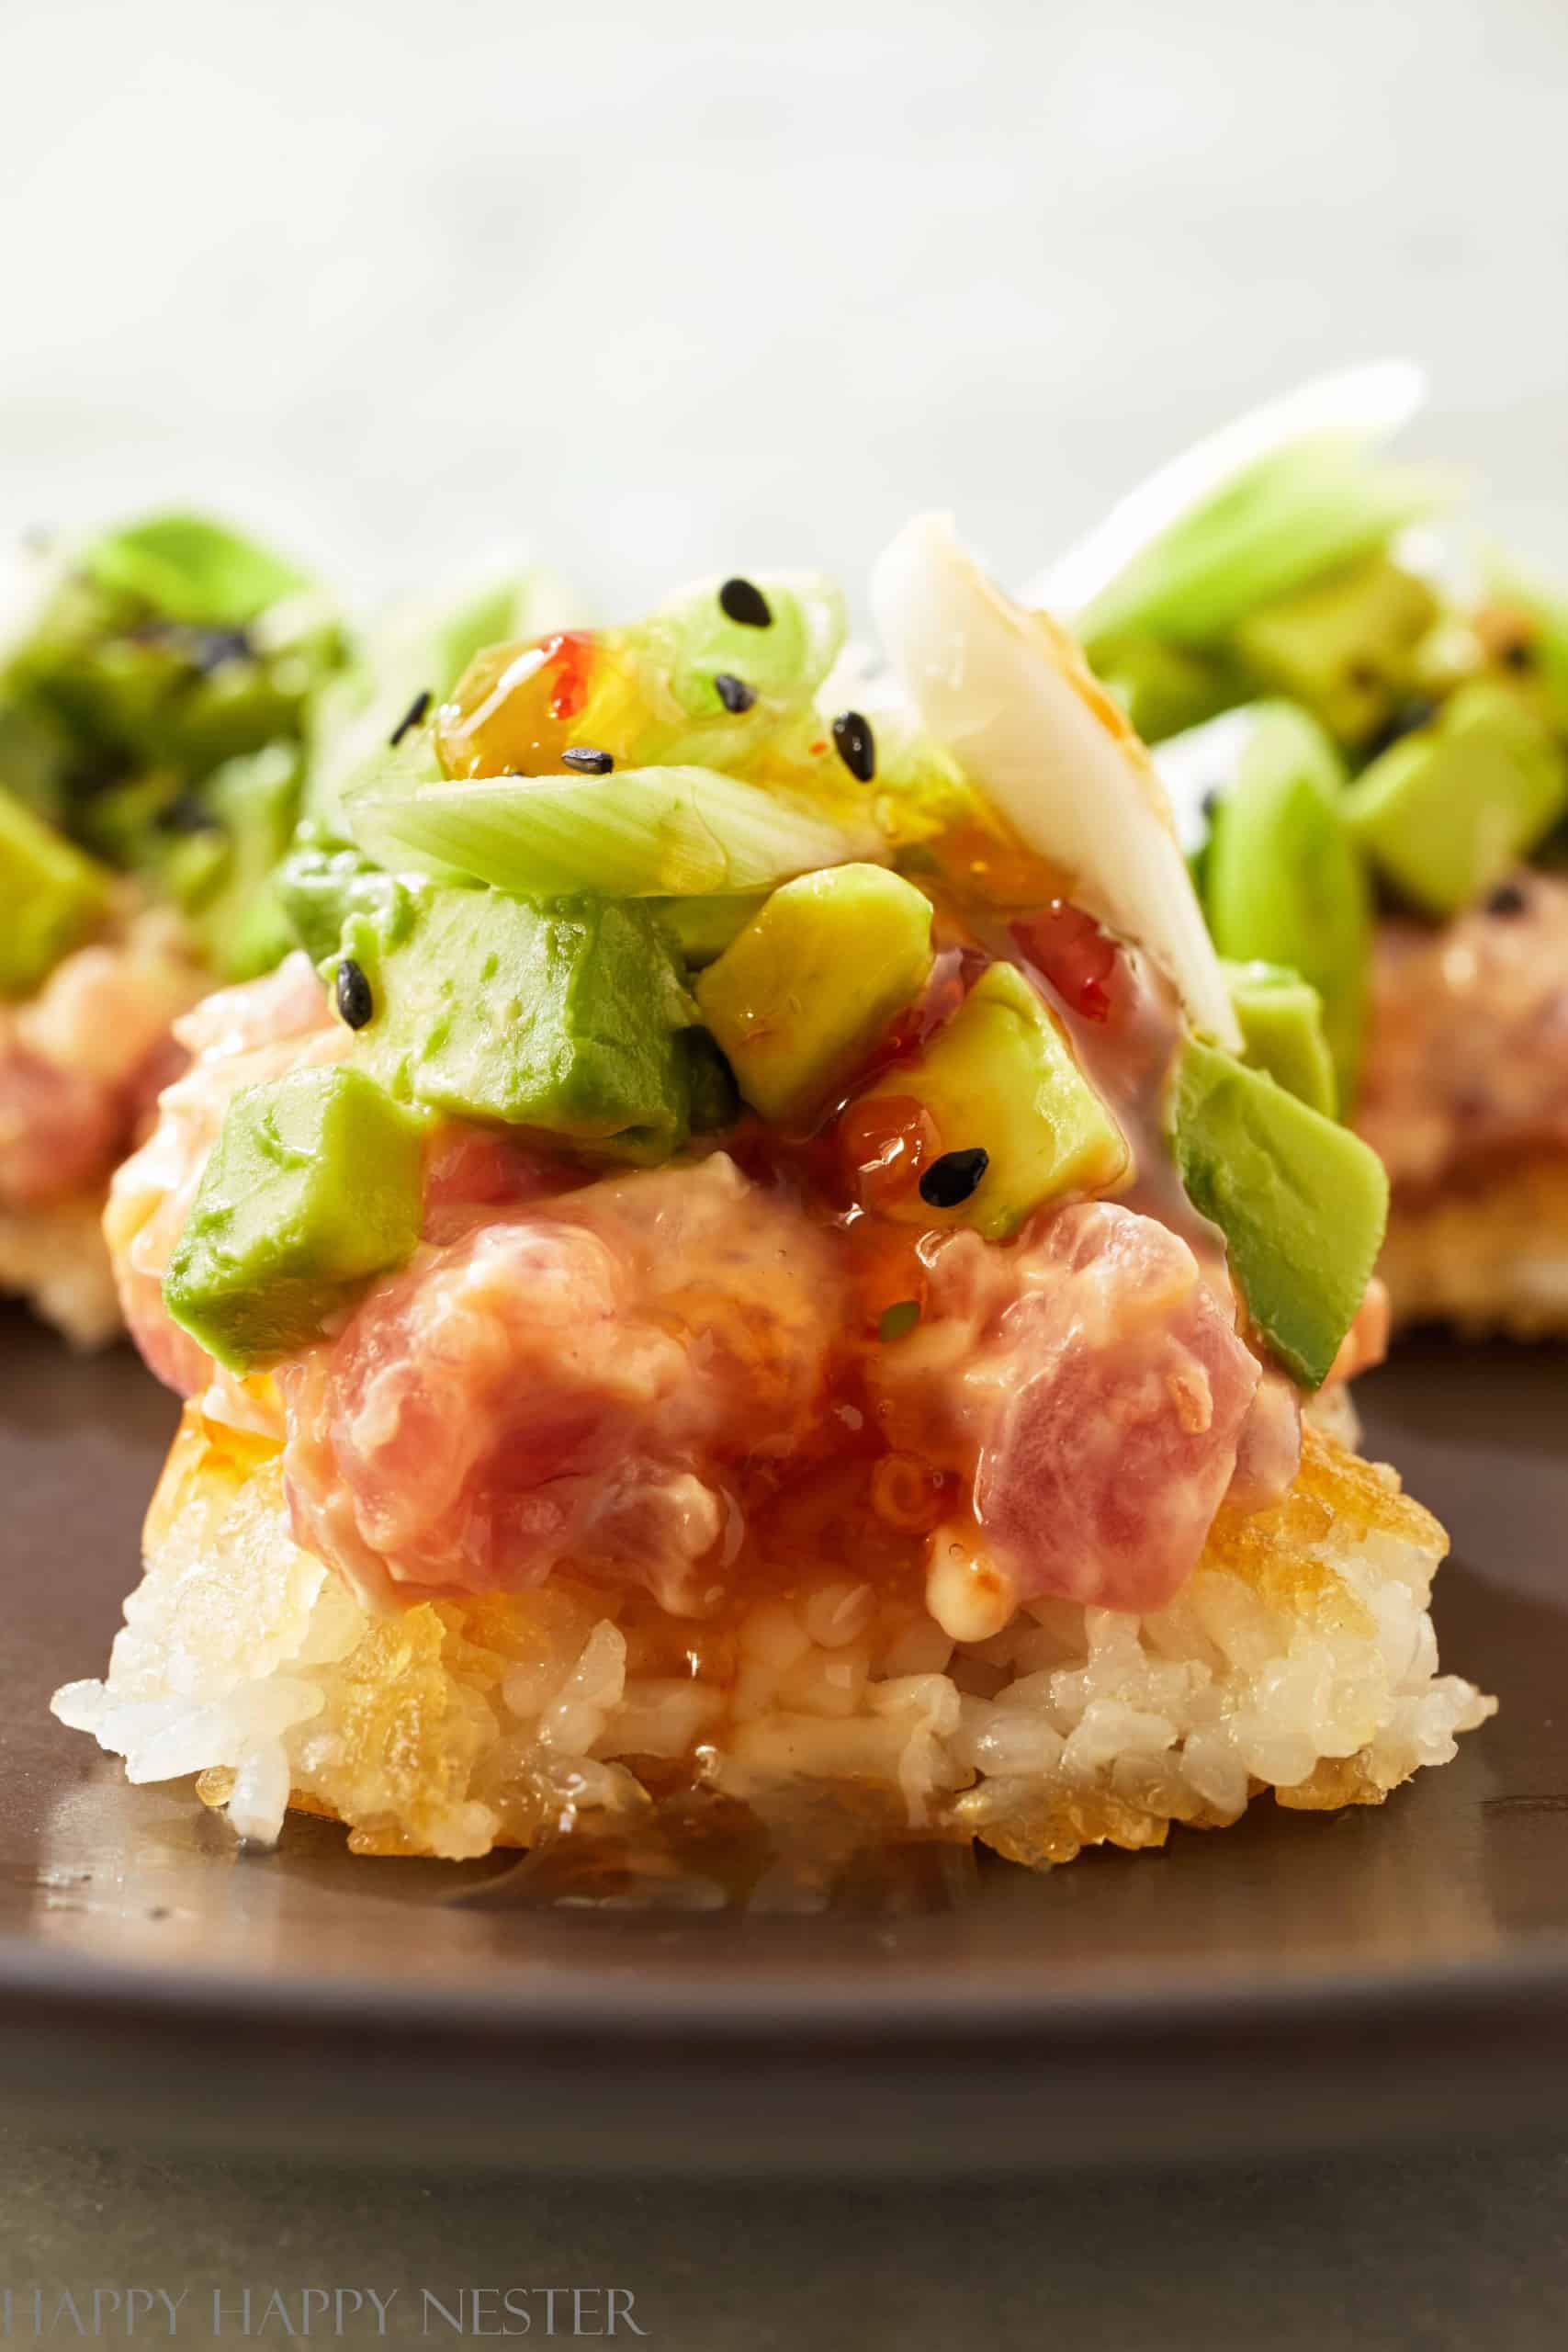 Spicy Tuna Crispy Rice Cakes Recipe - WhitneyBond.com